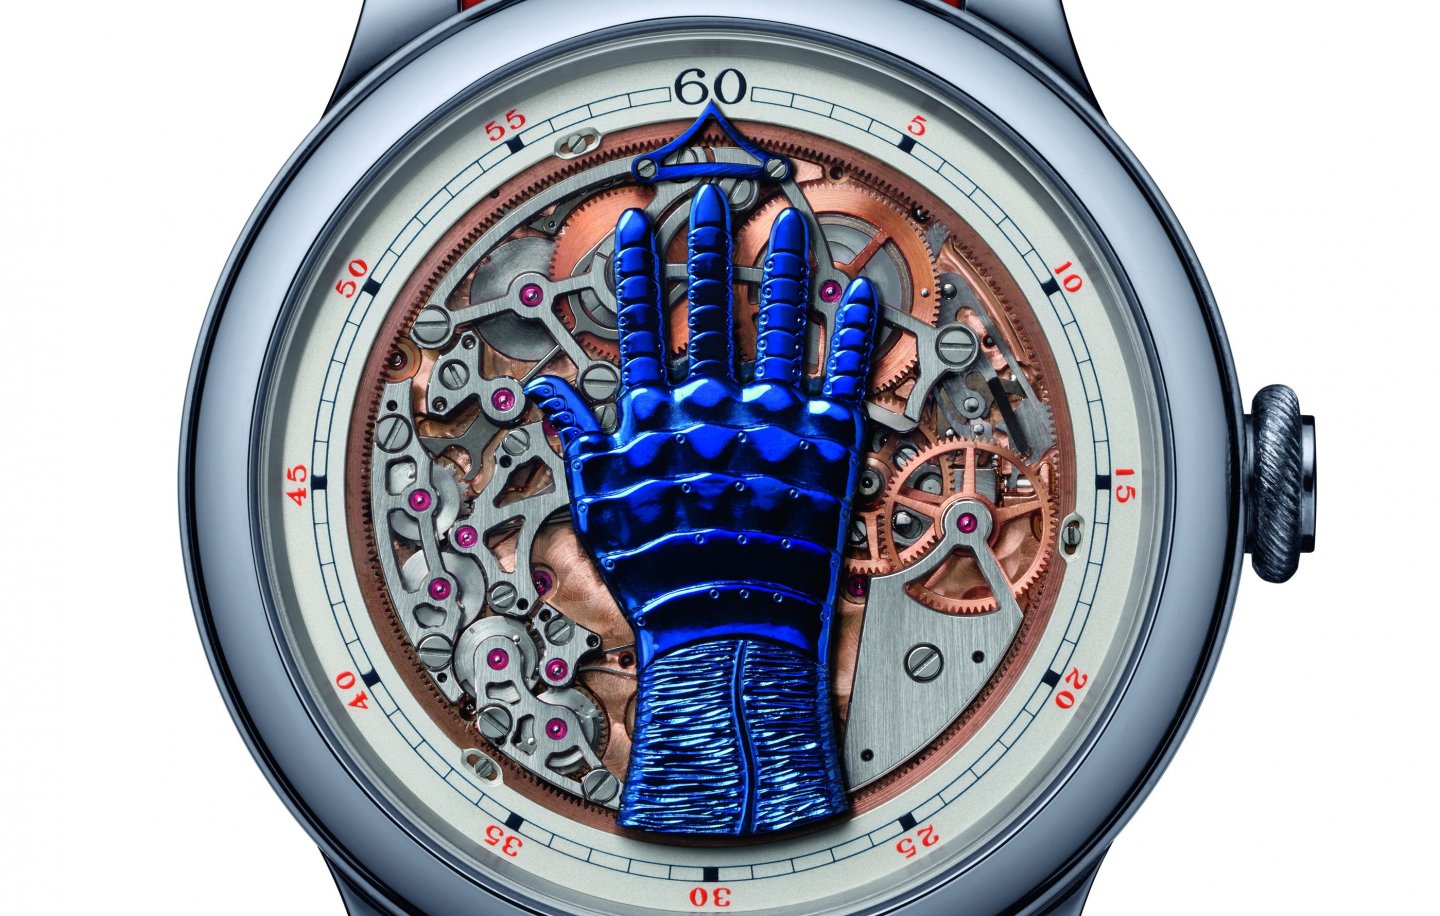 FP ジュルヌのOnly Watch作品「FFC Blue」～時計の概念を揺るがすような時刻表示法を提示